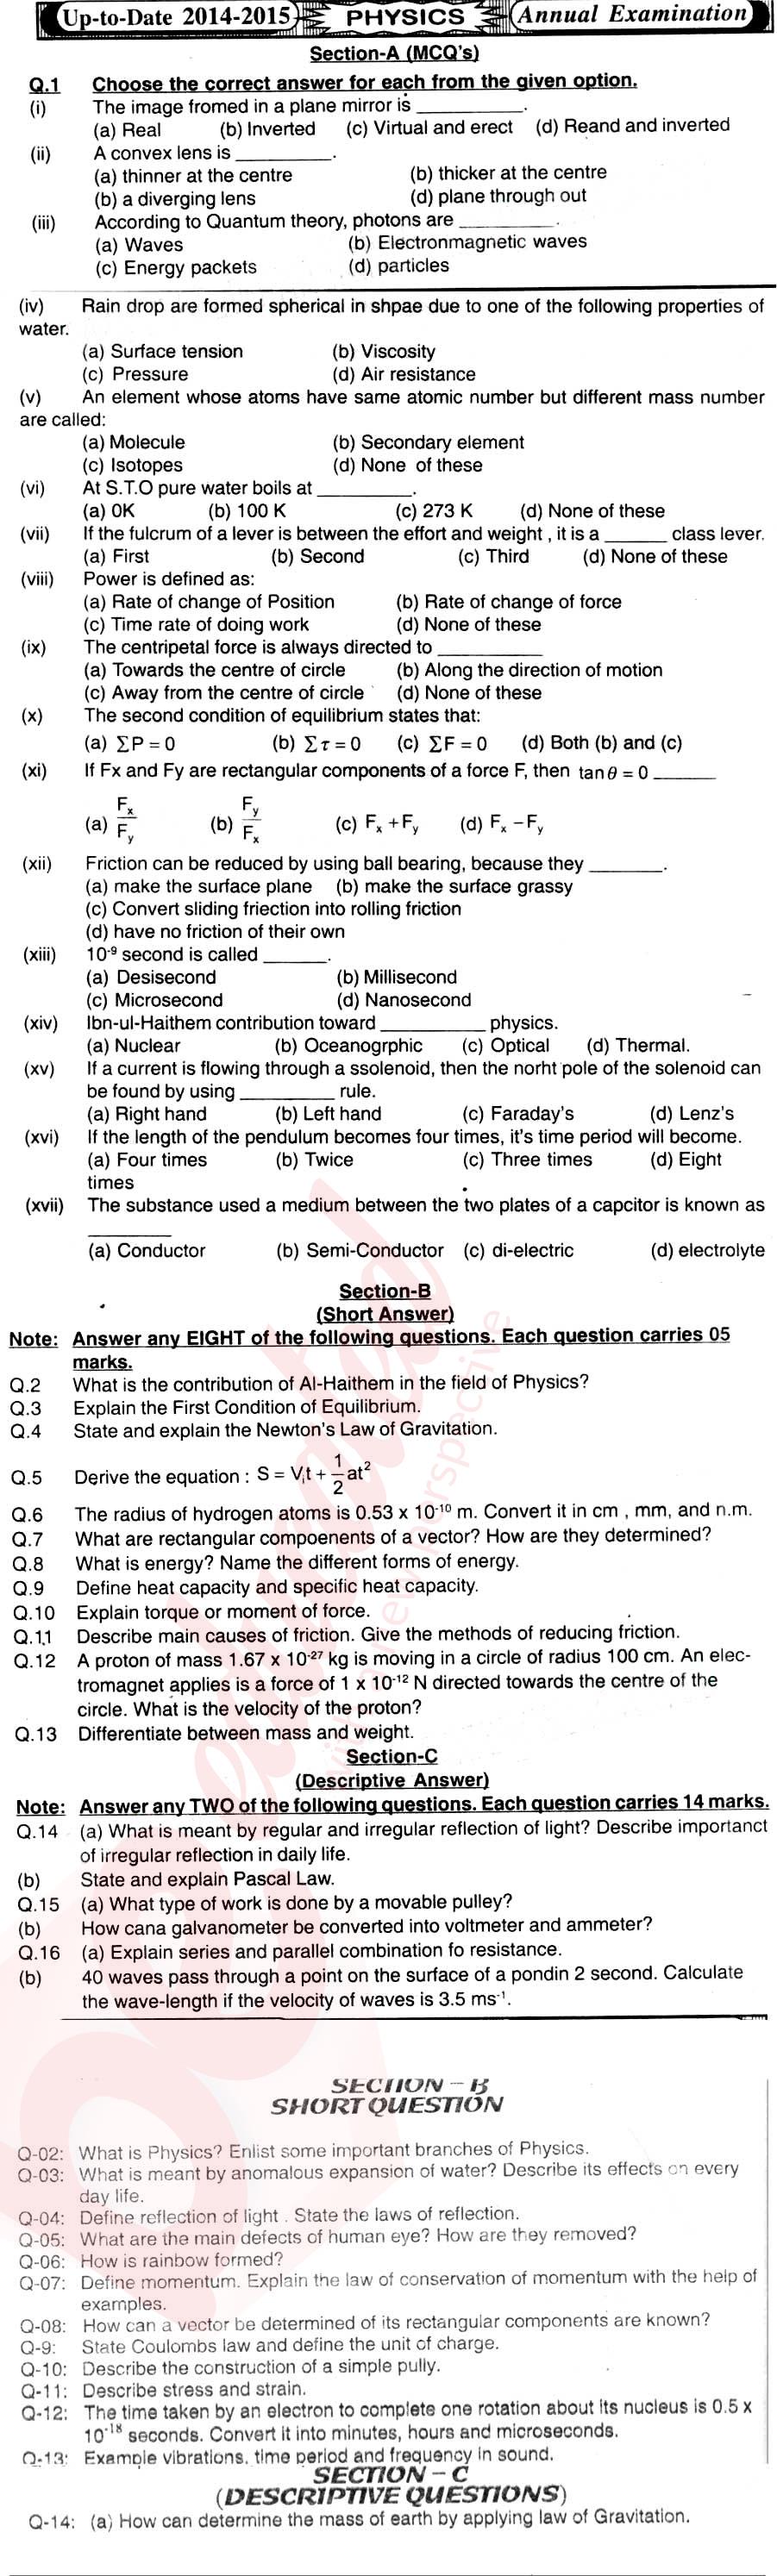 Physics 10th English Medium Past Paper Group 1 BISE Hyderabad 2015